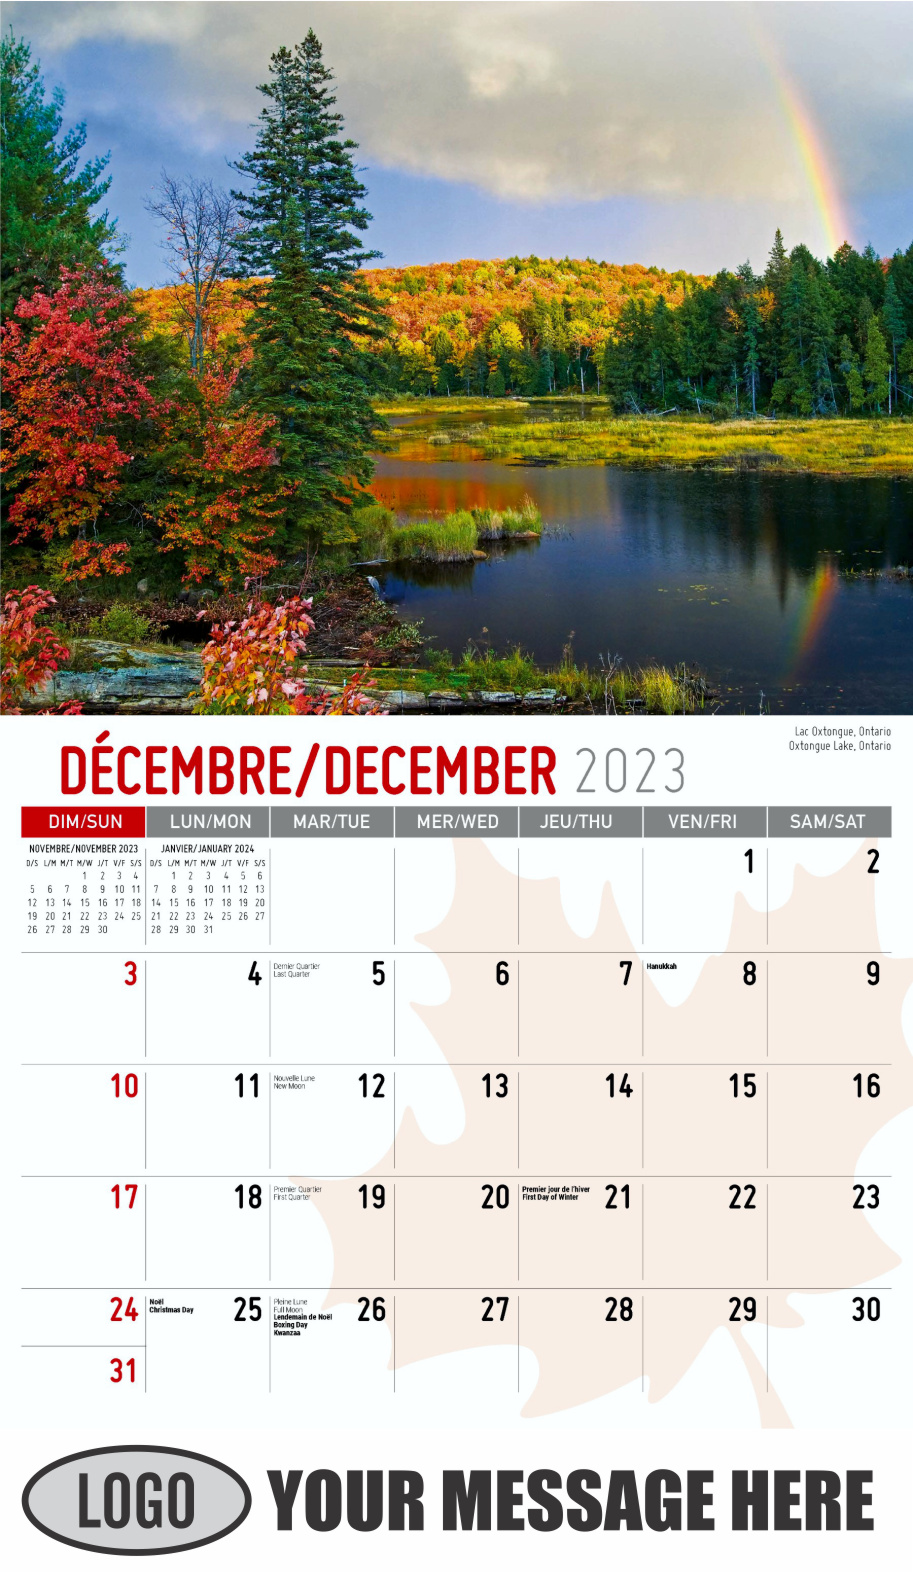 Scenes of Canada 2024 Bilingual Business Advertising Calendar - December_a